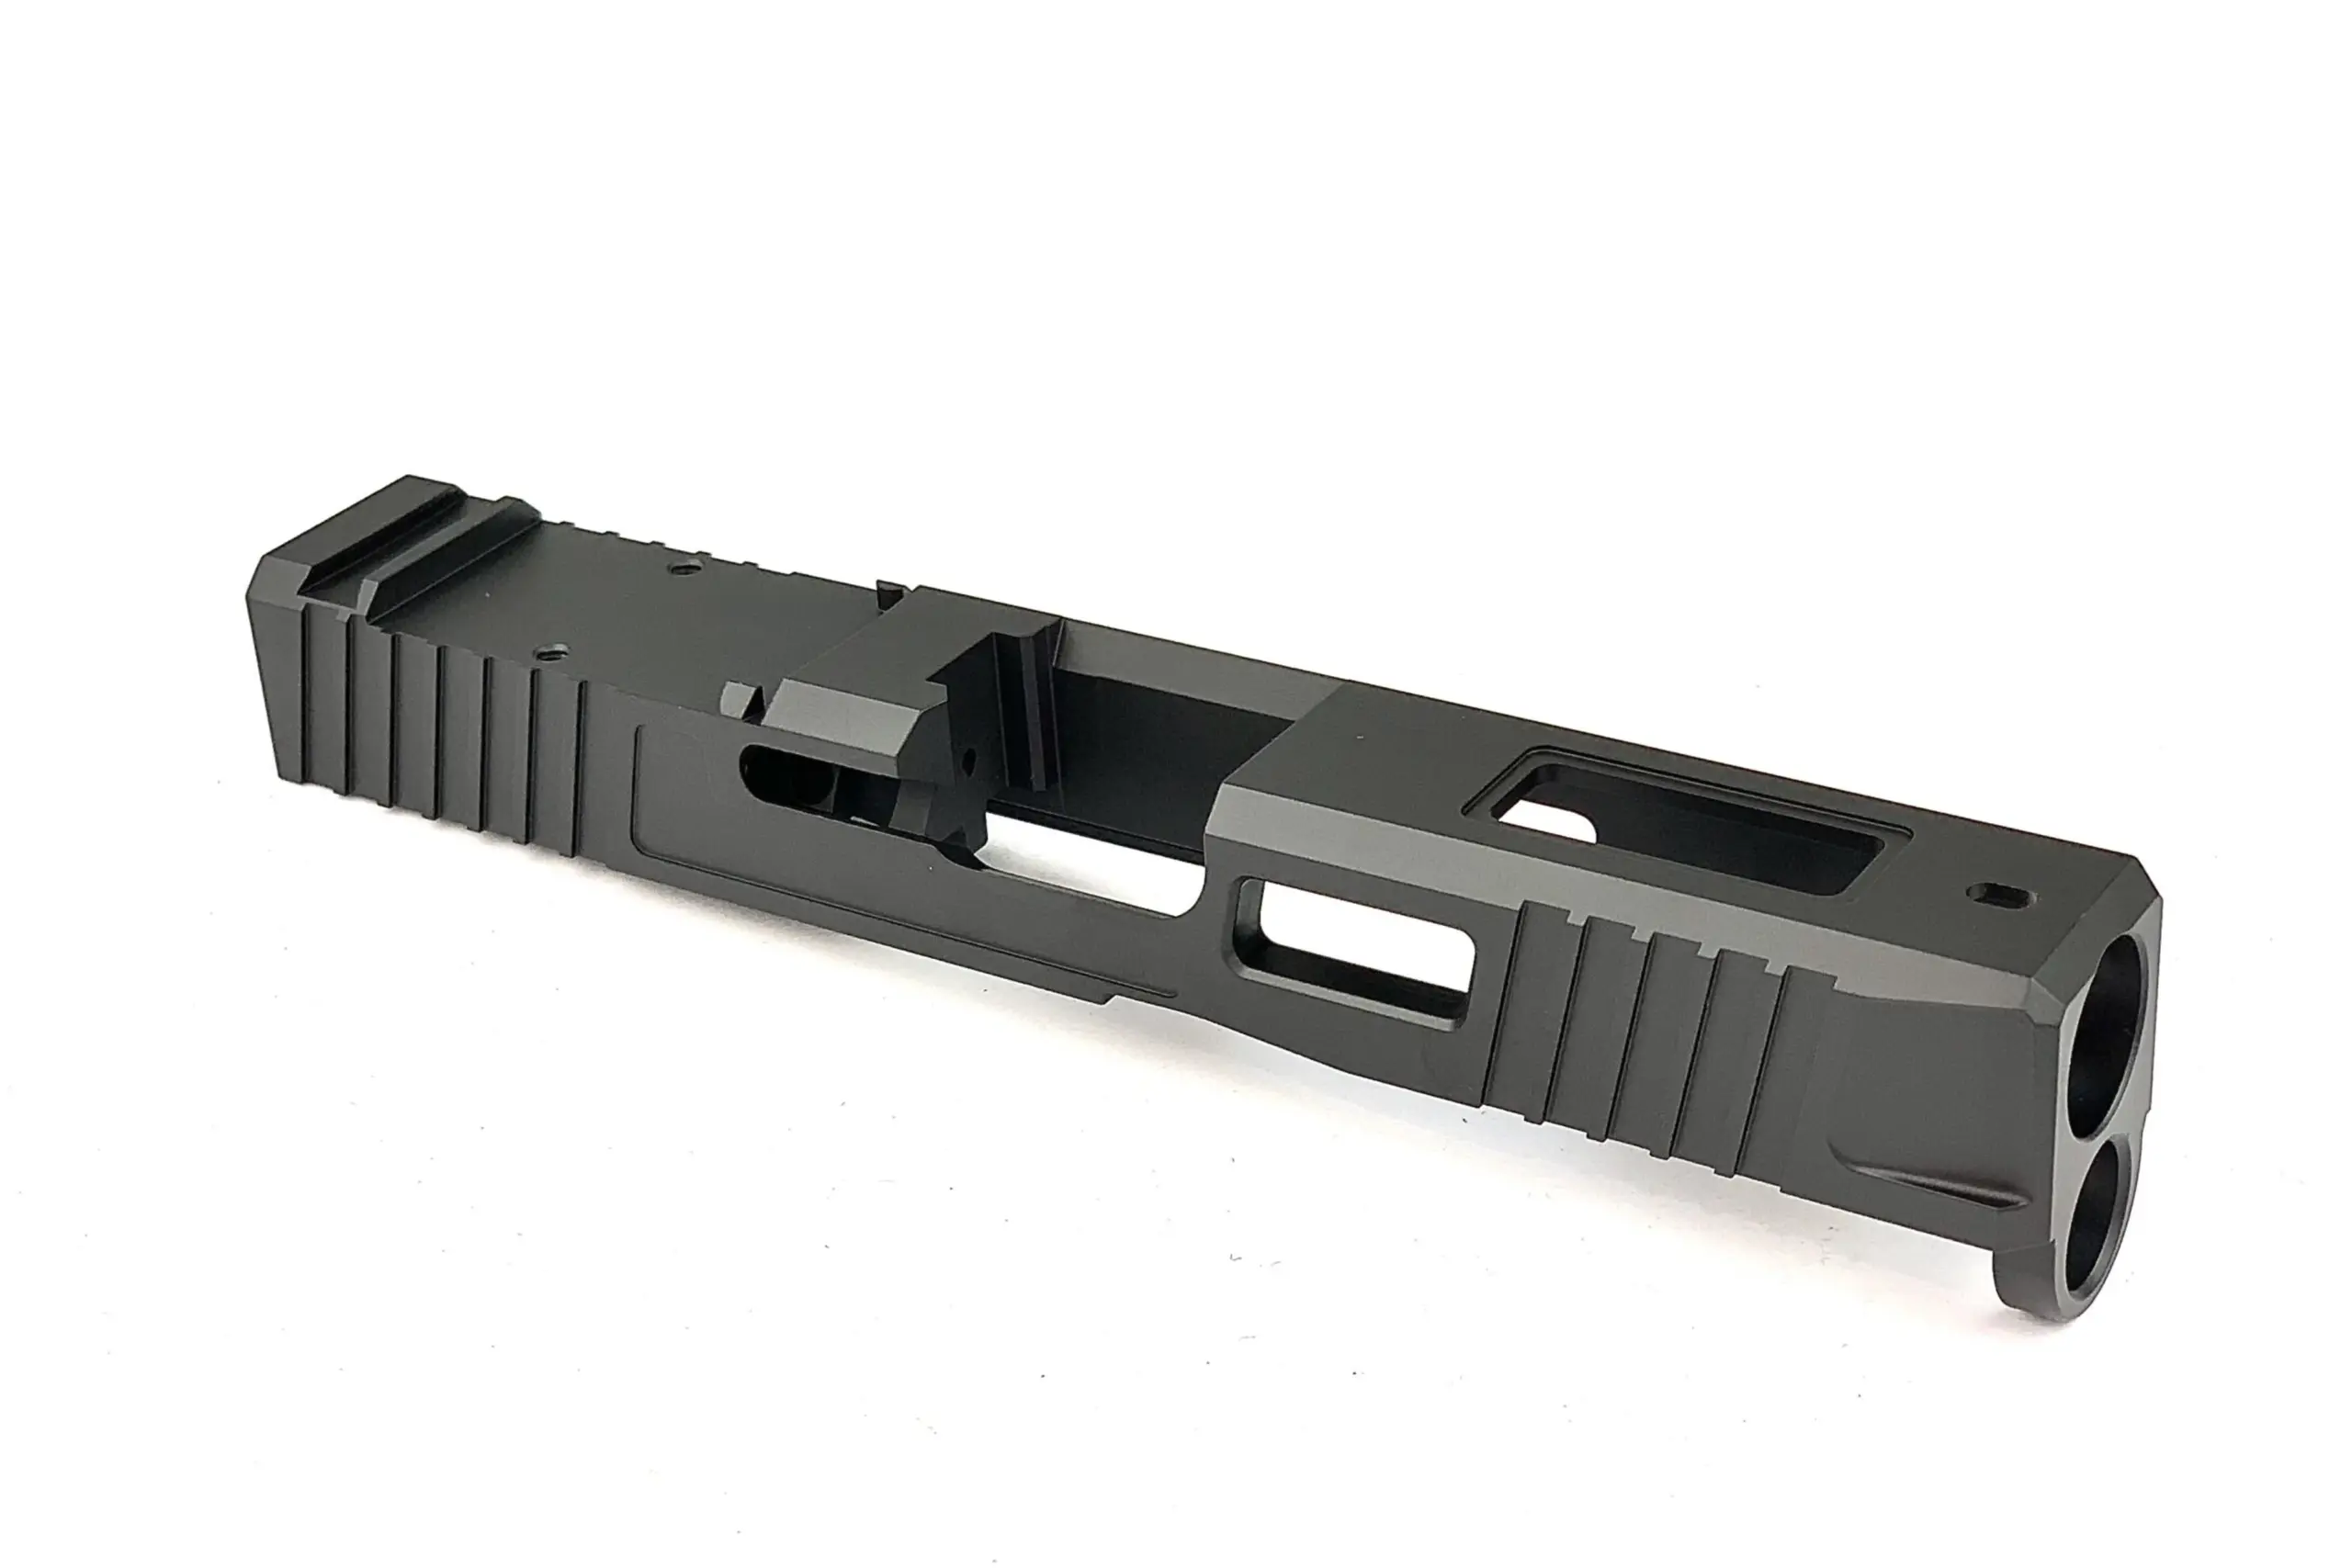 Concealer Glock 19 Gen 5 Slide